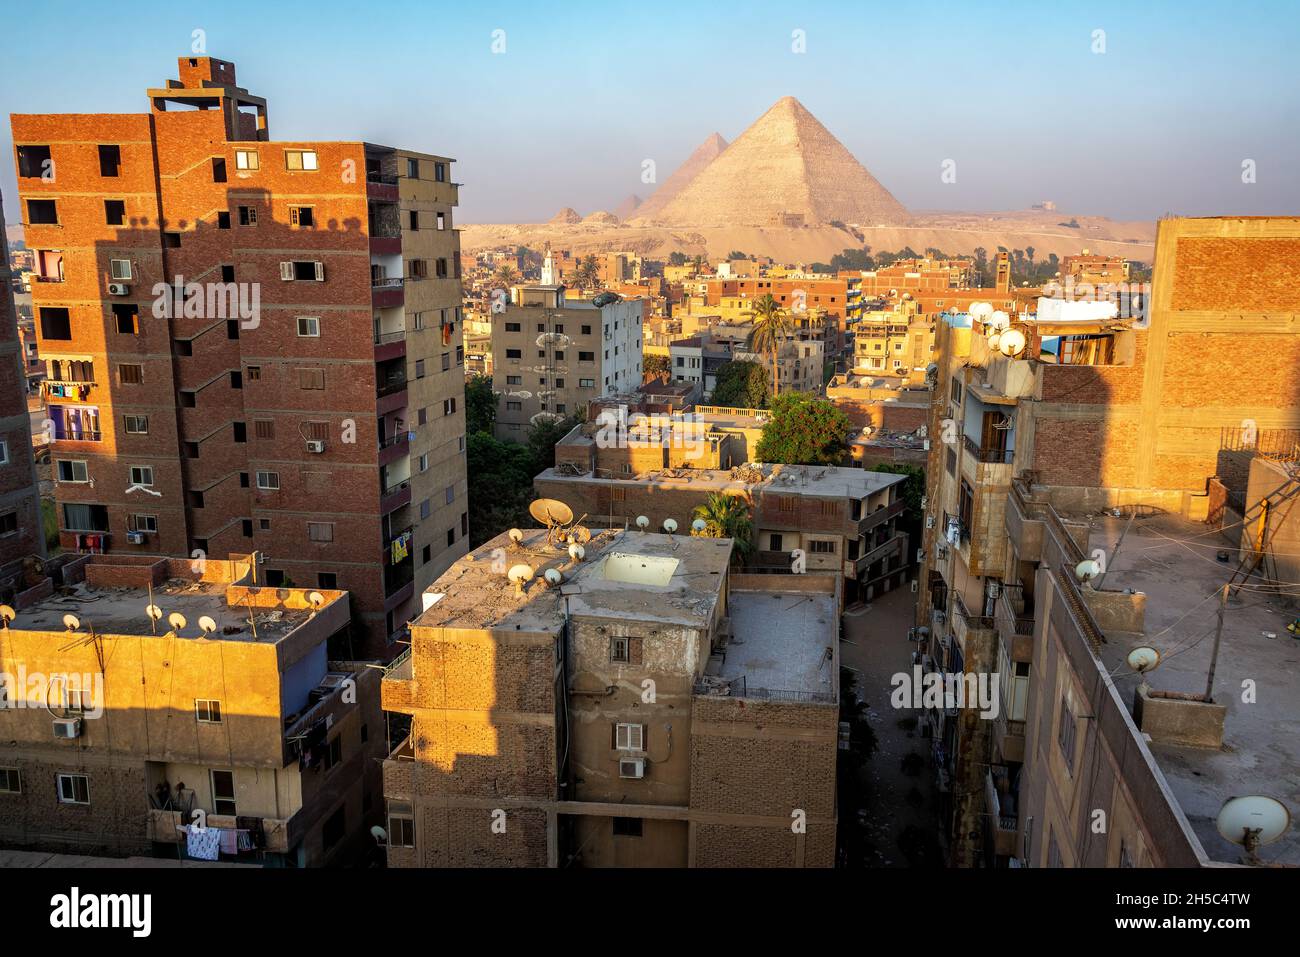 Giza cityscape and the pyramids in Egypt Stock Photo